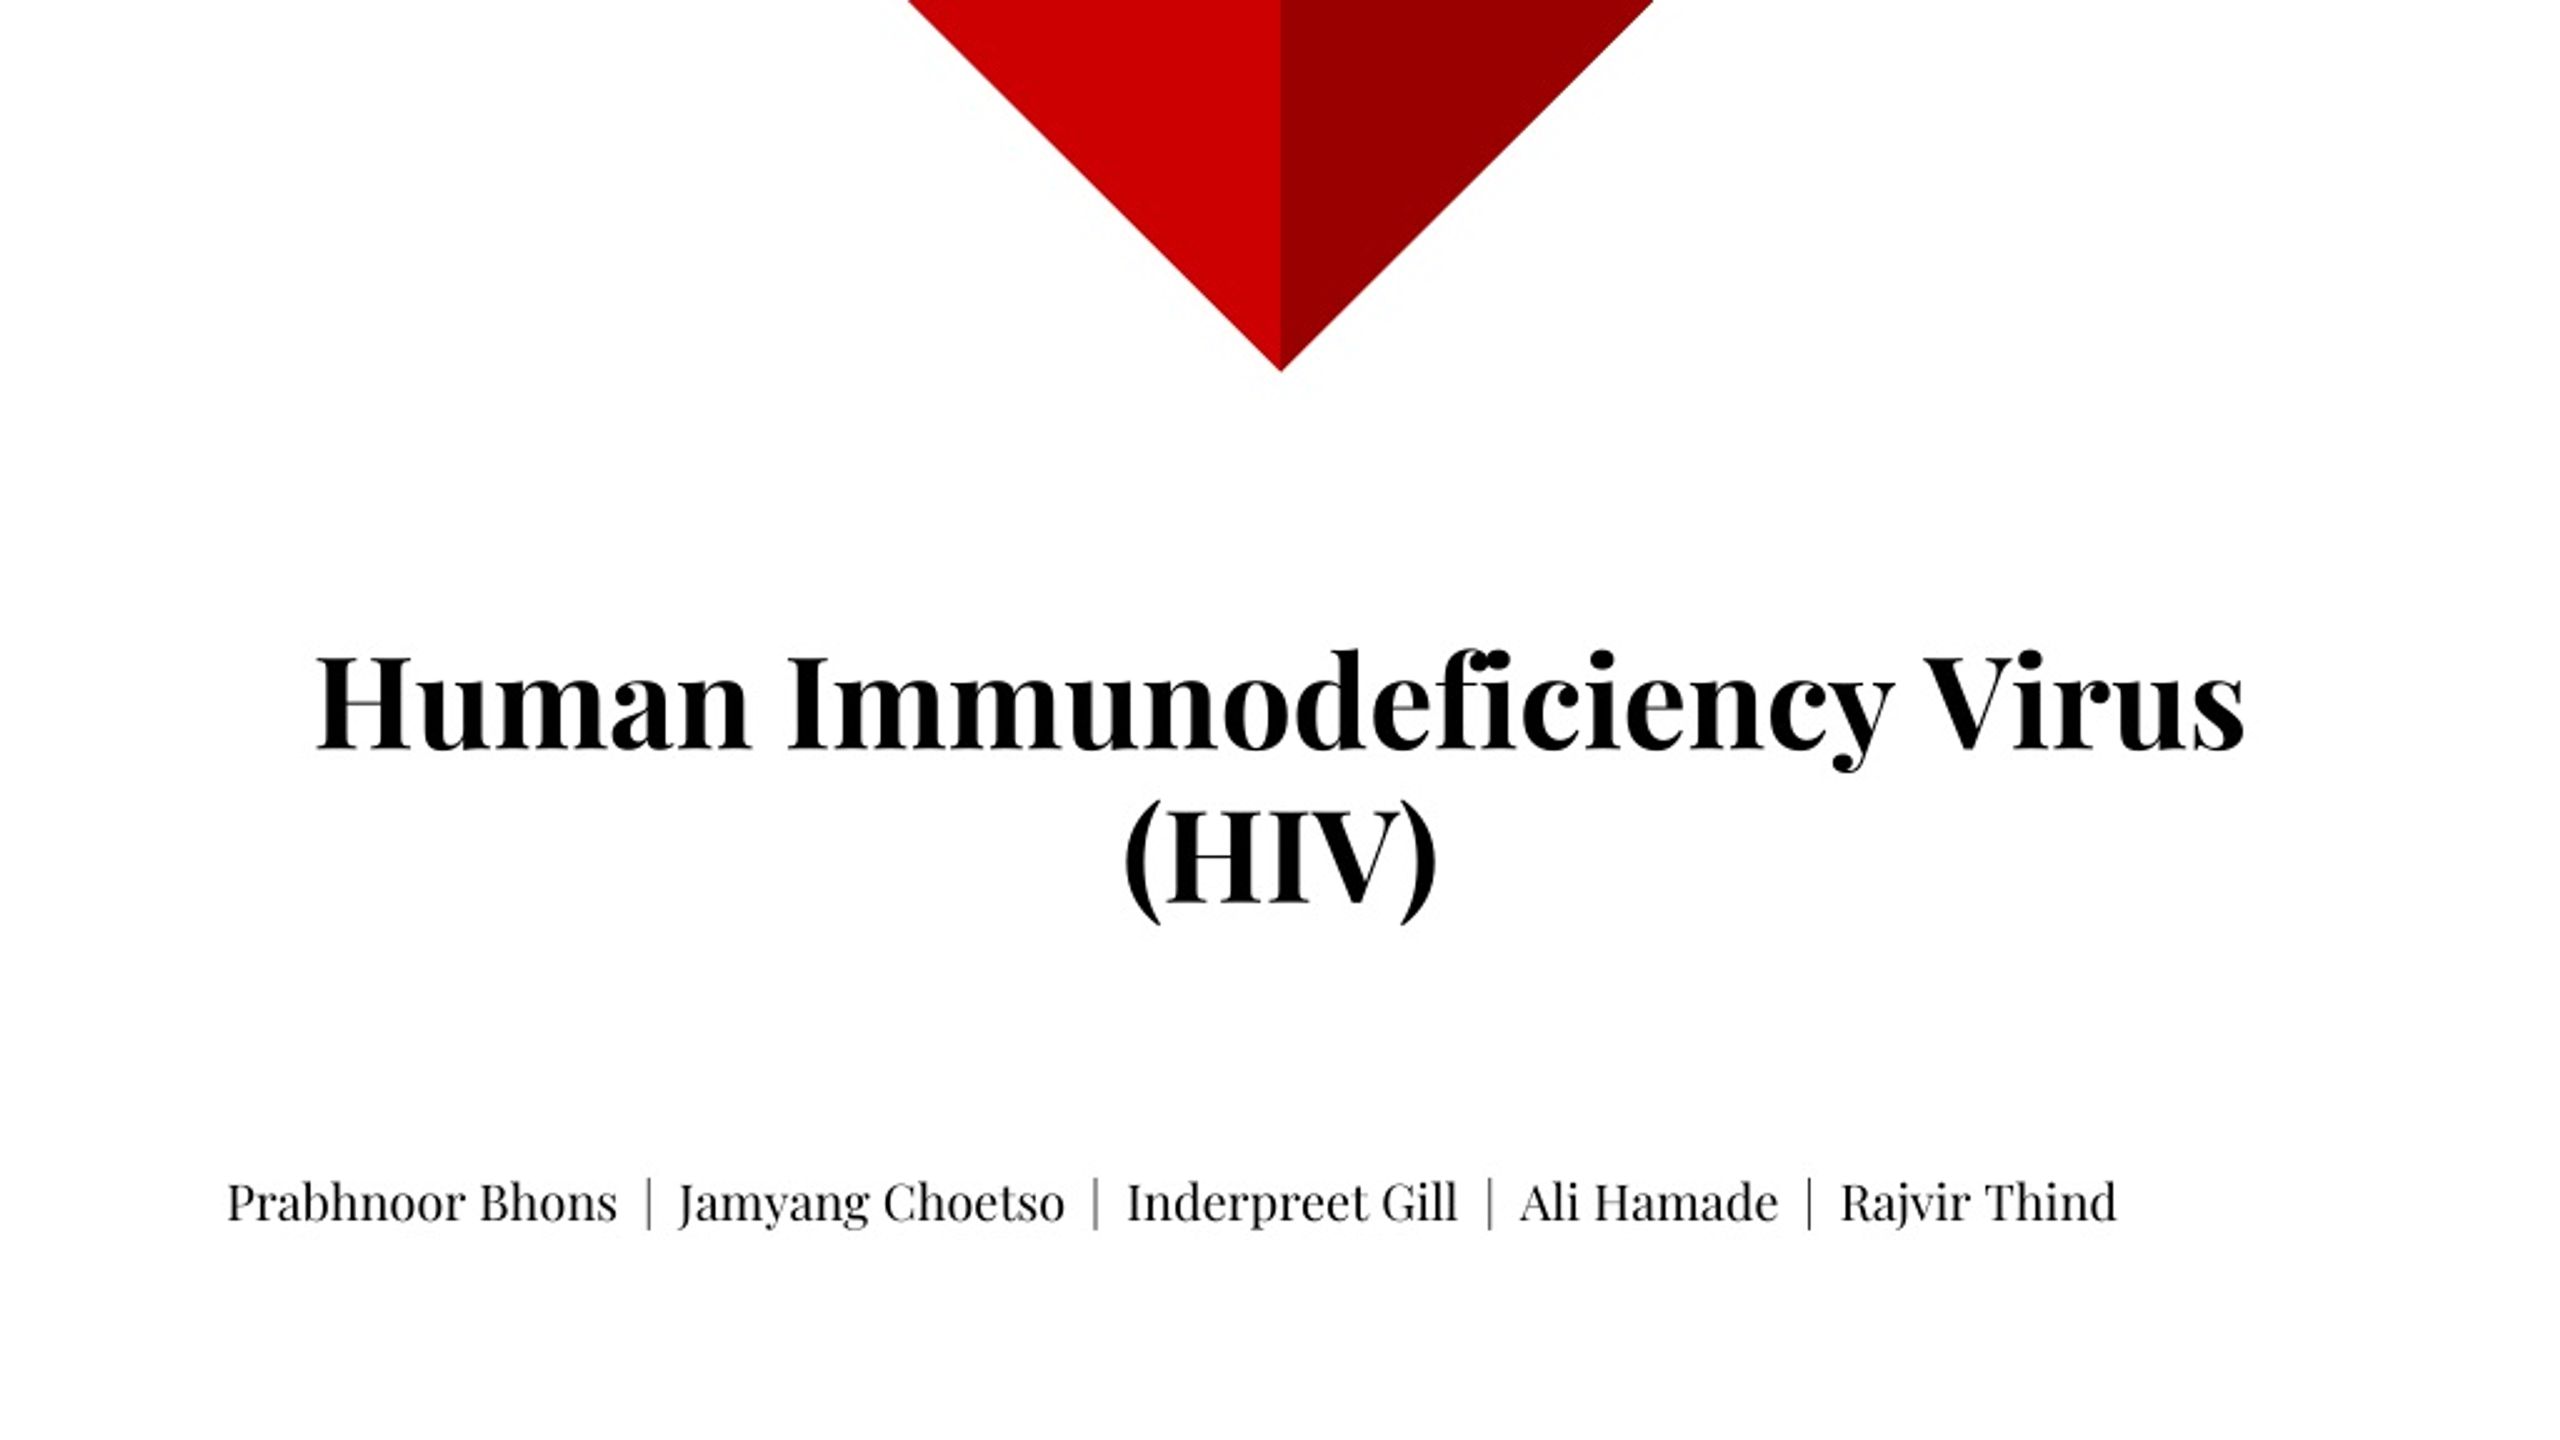 Human immunodeficiency. EASYCATALOG.